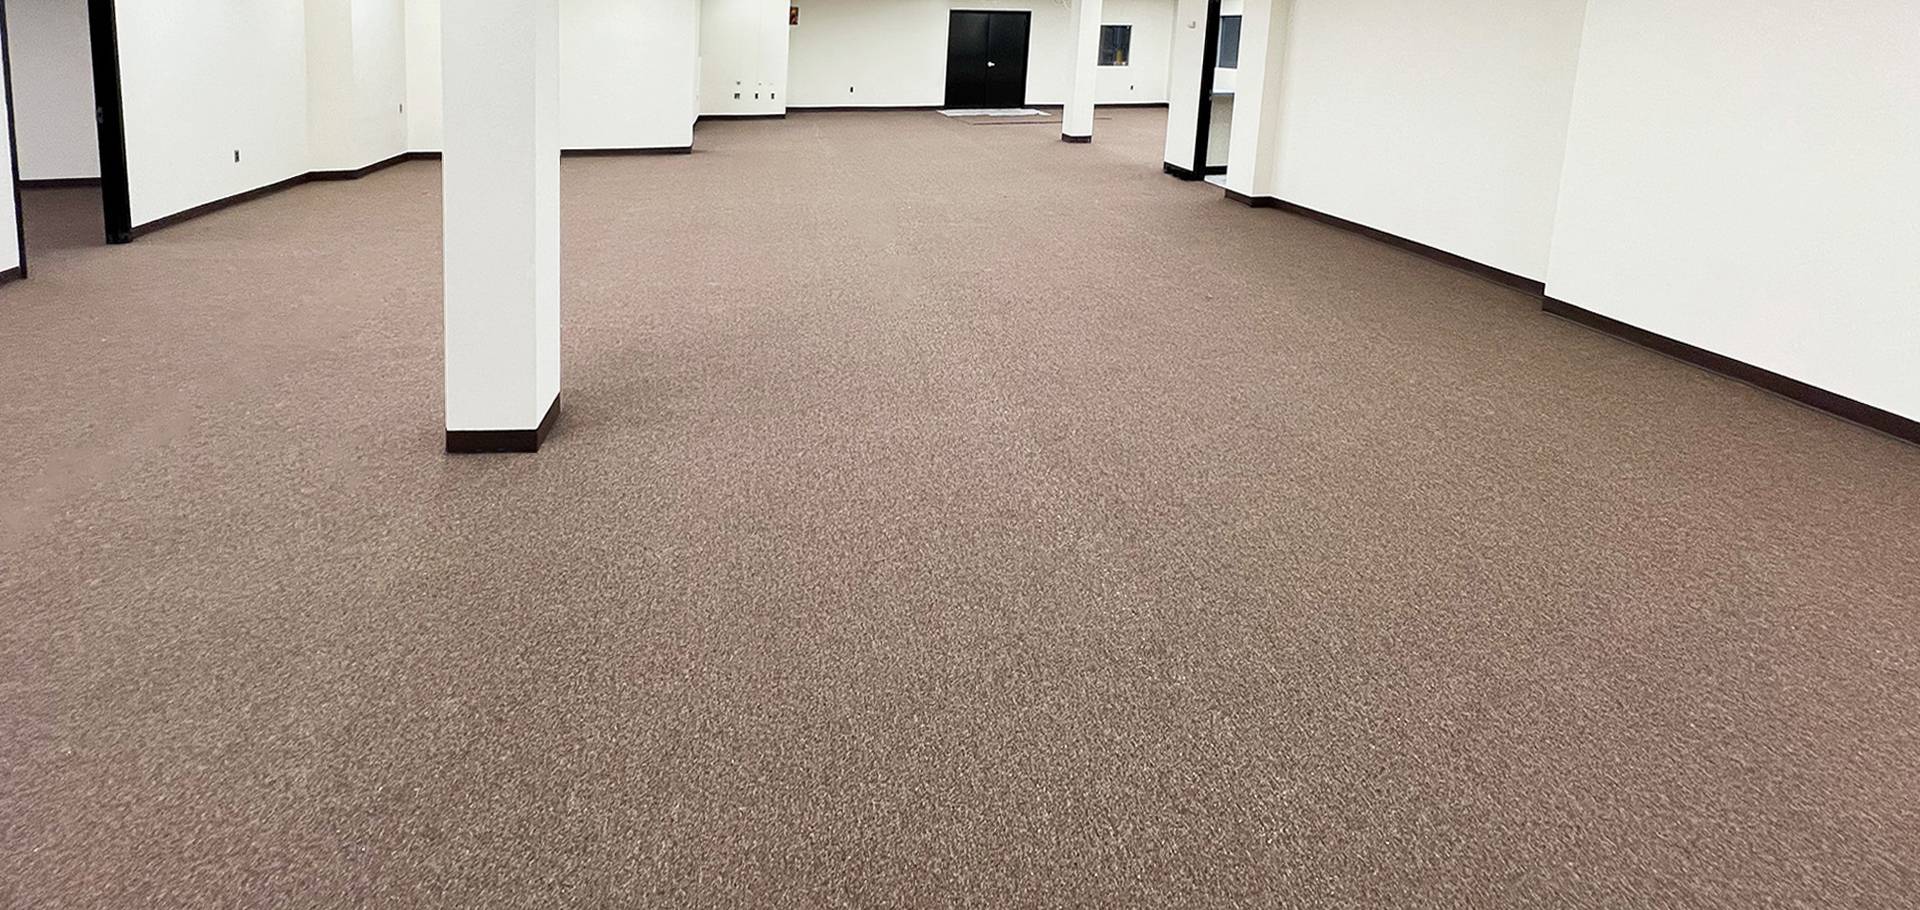 Abe’s Carpet and Flooring 